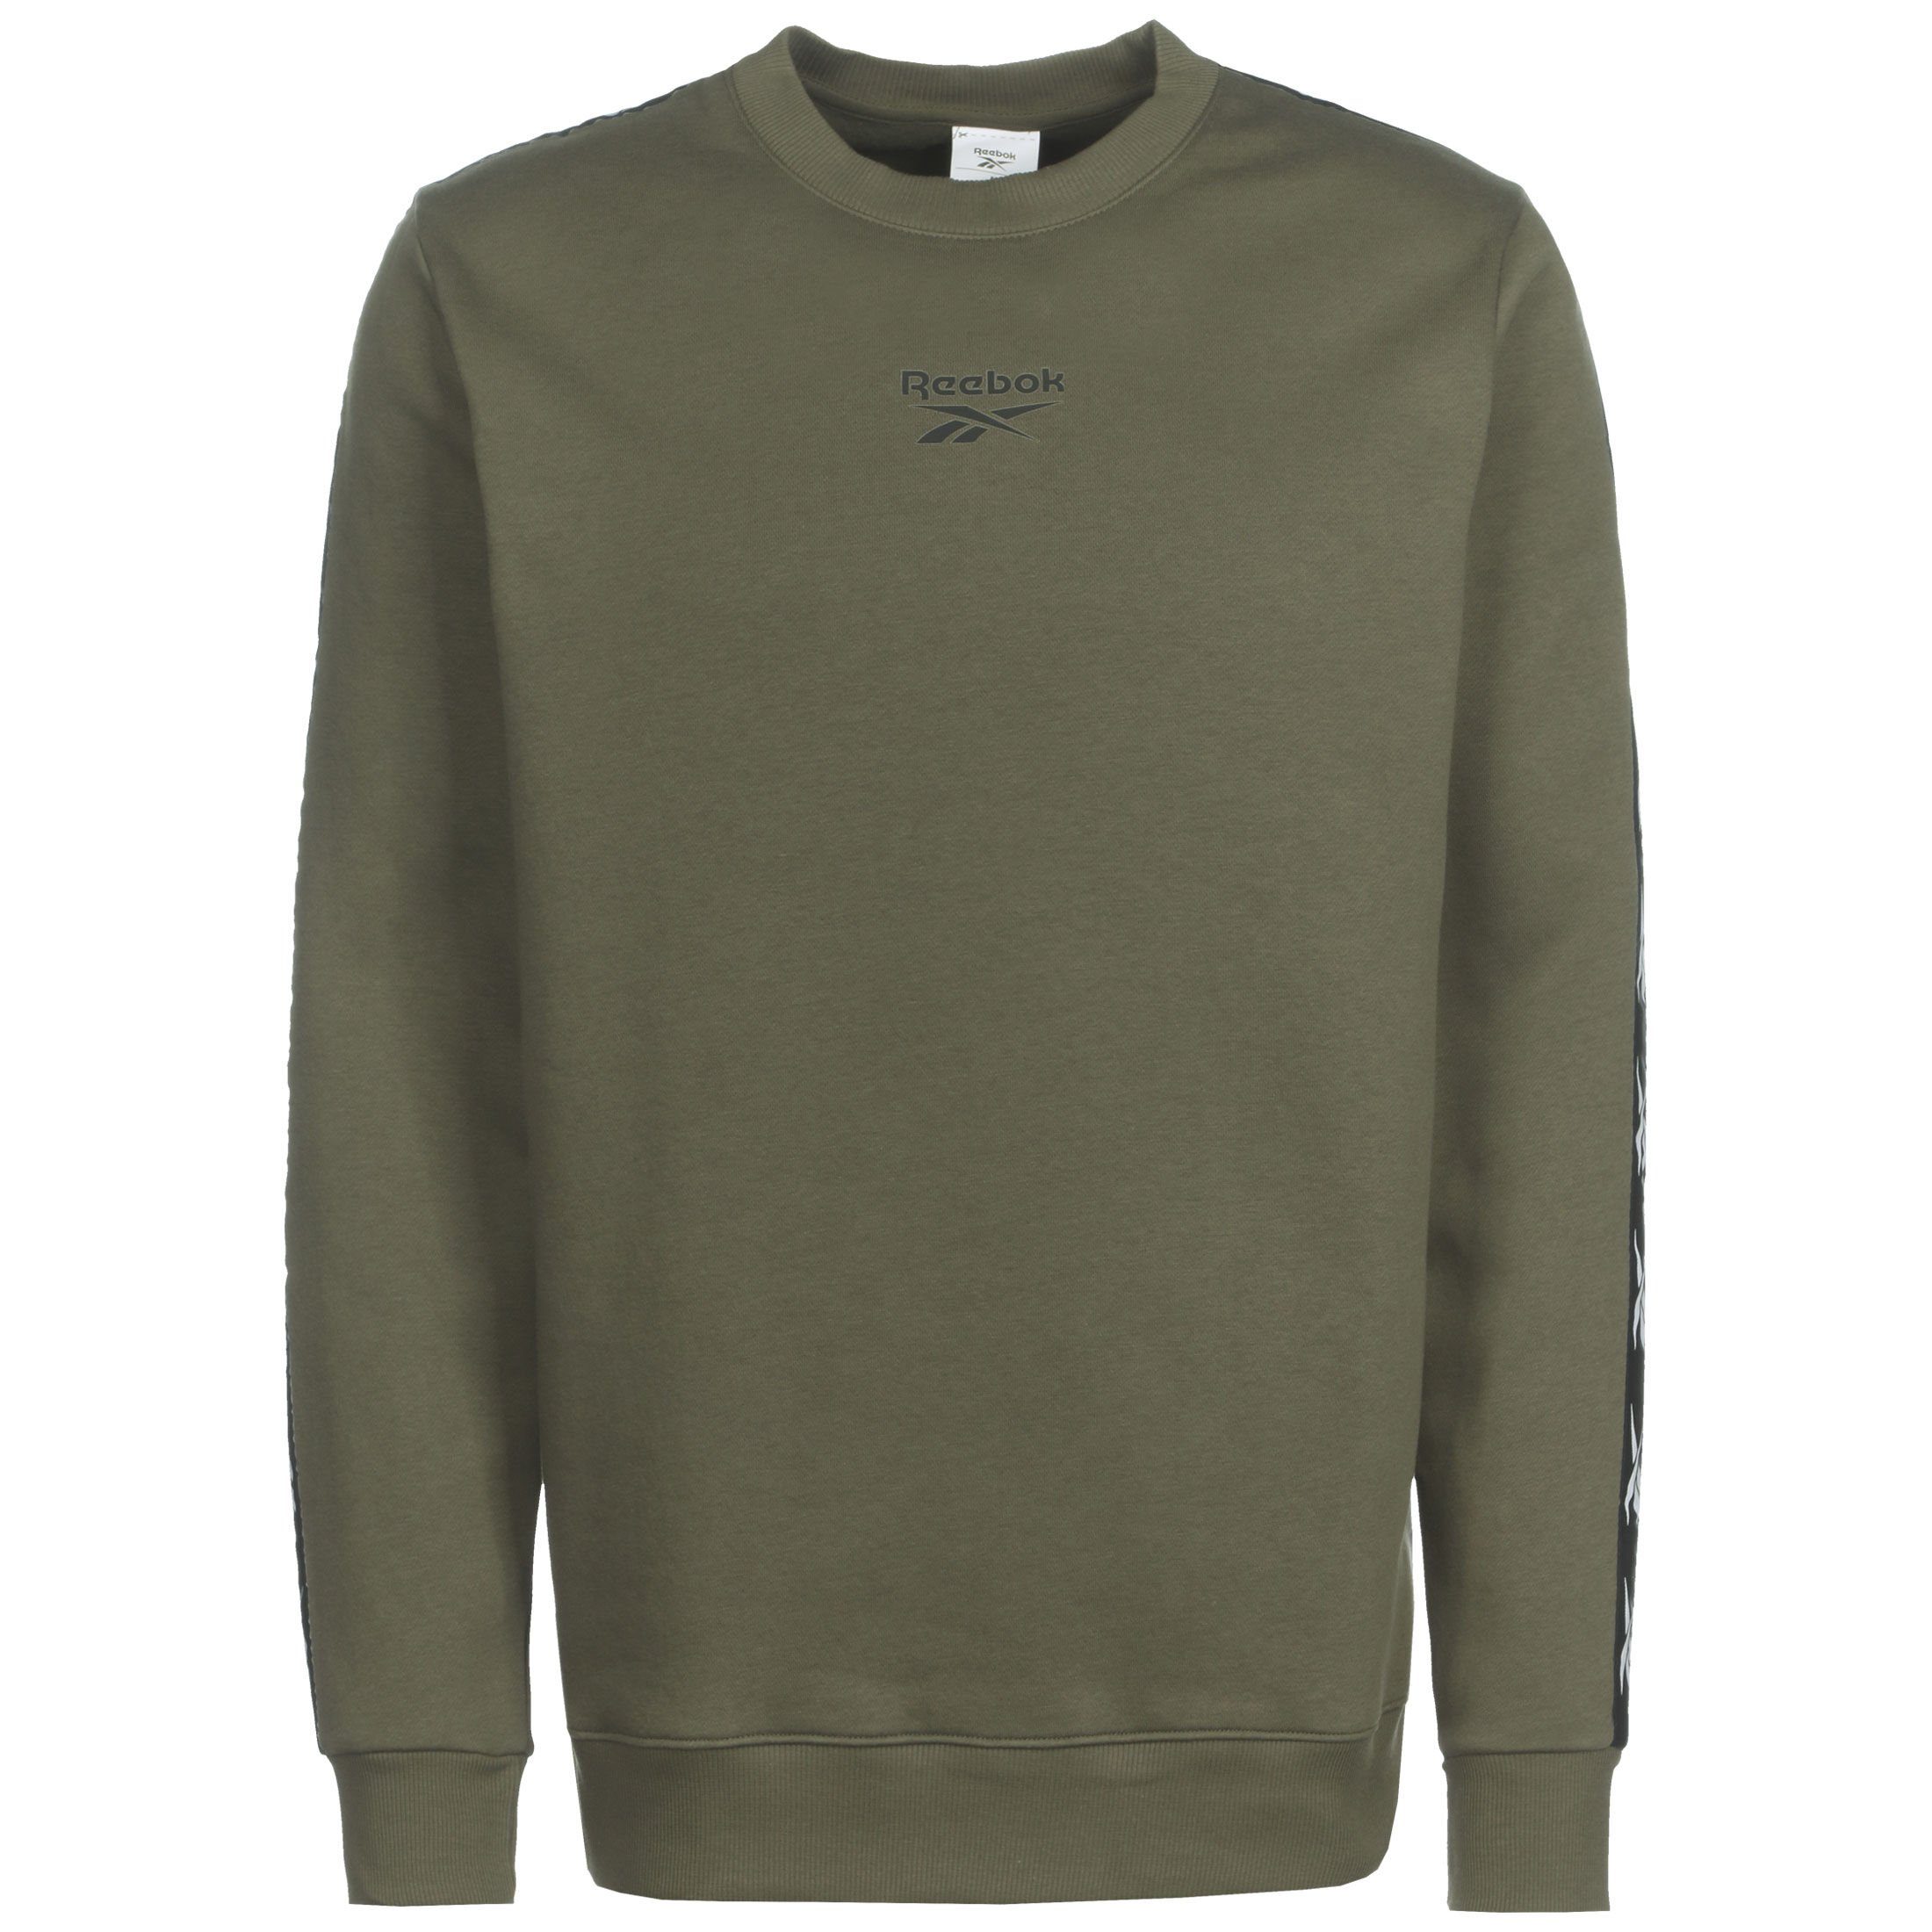 Reebok Sweatshirt Essentials Tape Sweatshirt Herren khaki / graugrün